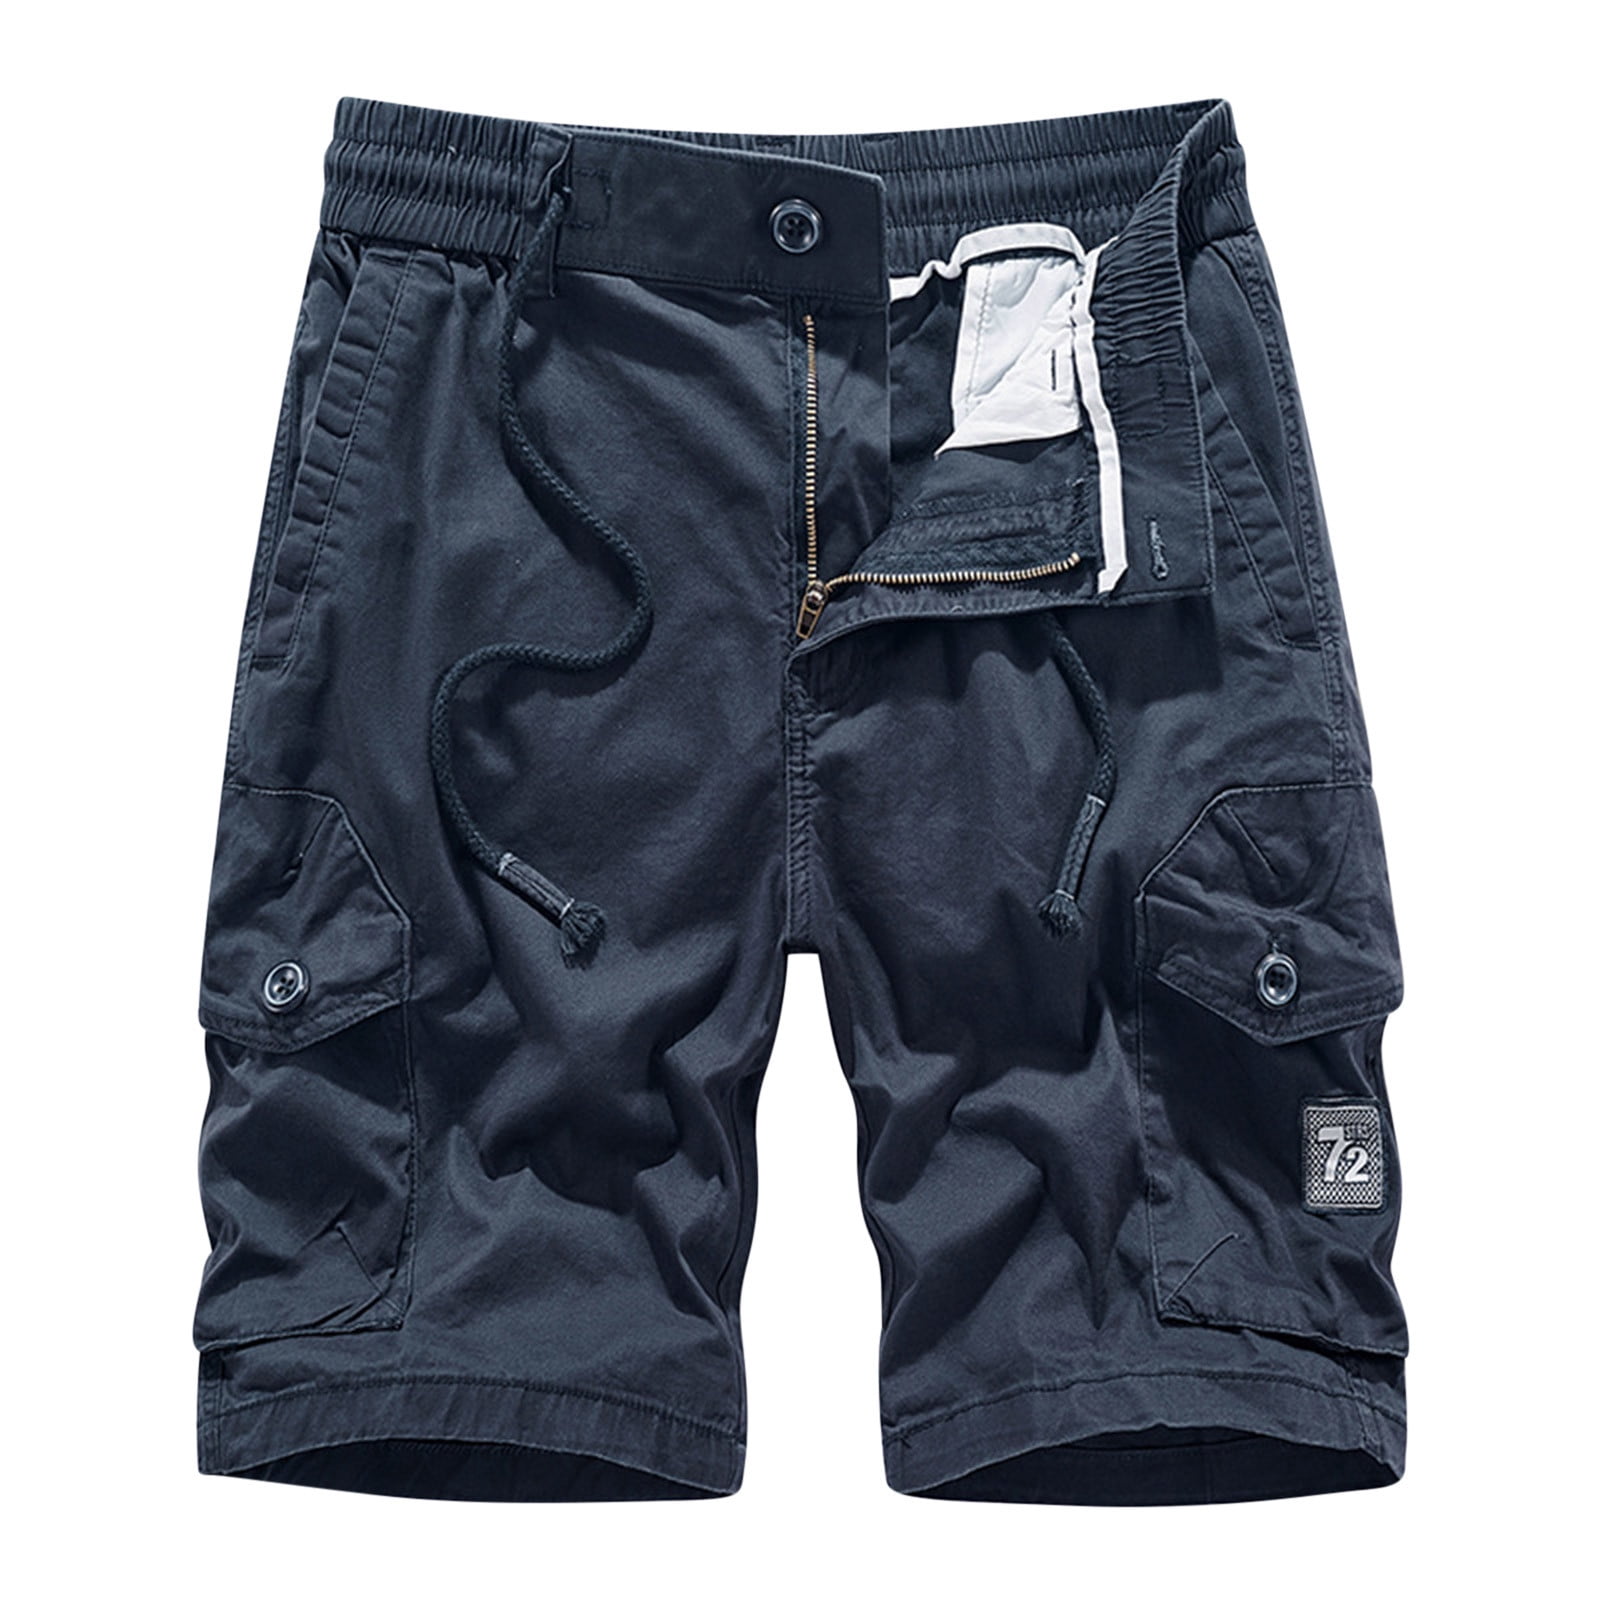 VSSSJ Tooling Shorts for Men Loose Fit Elastic Waist Button Zipper 